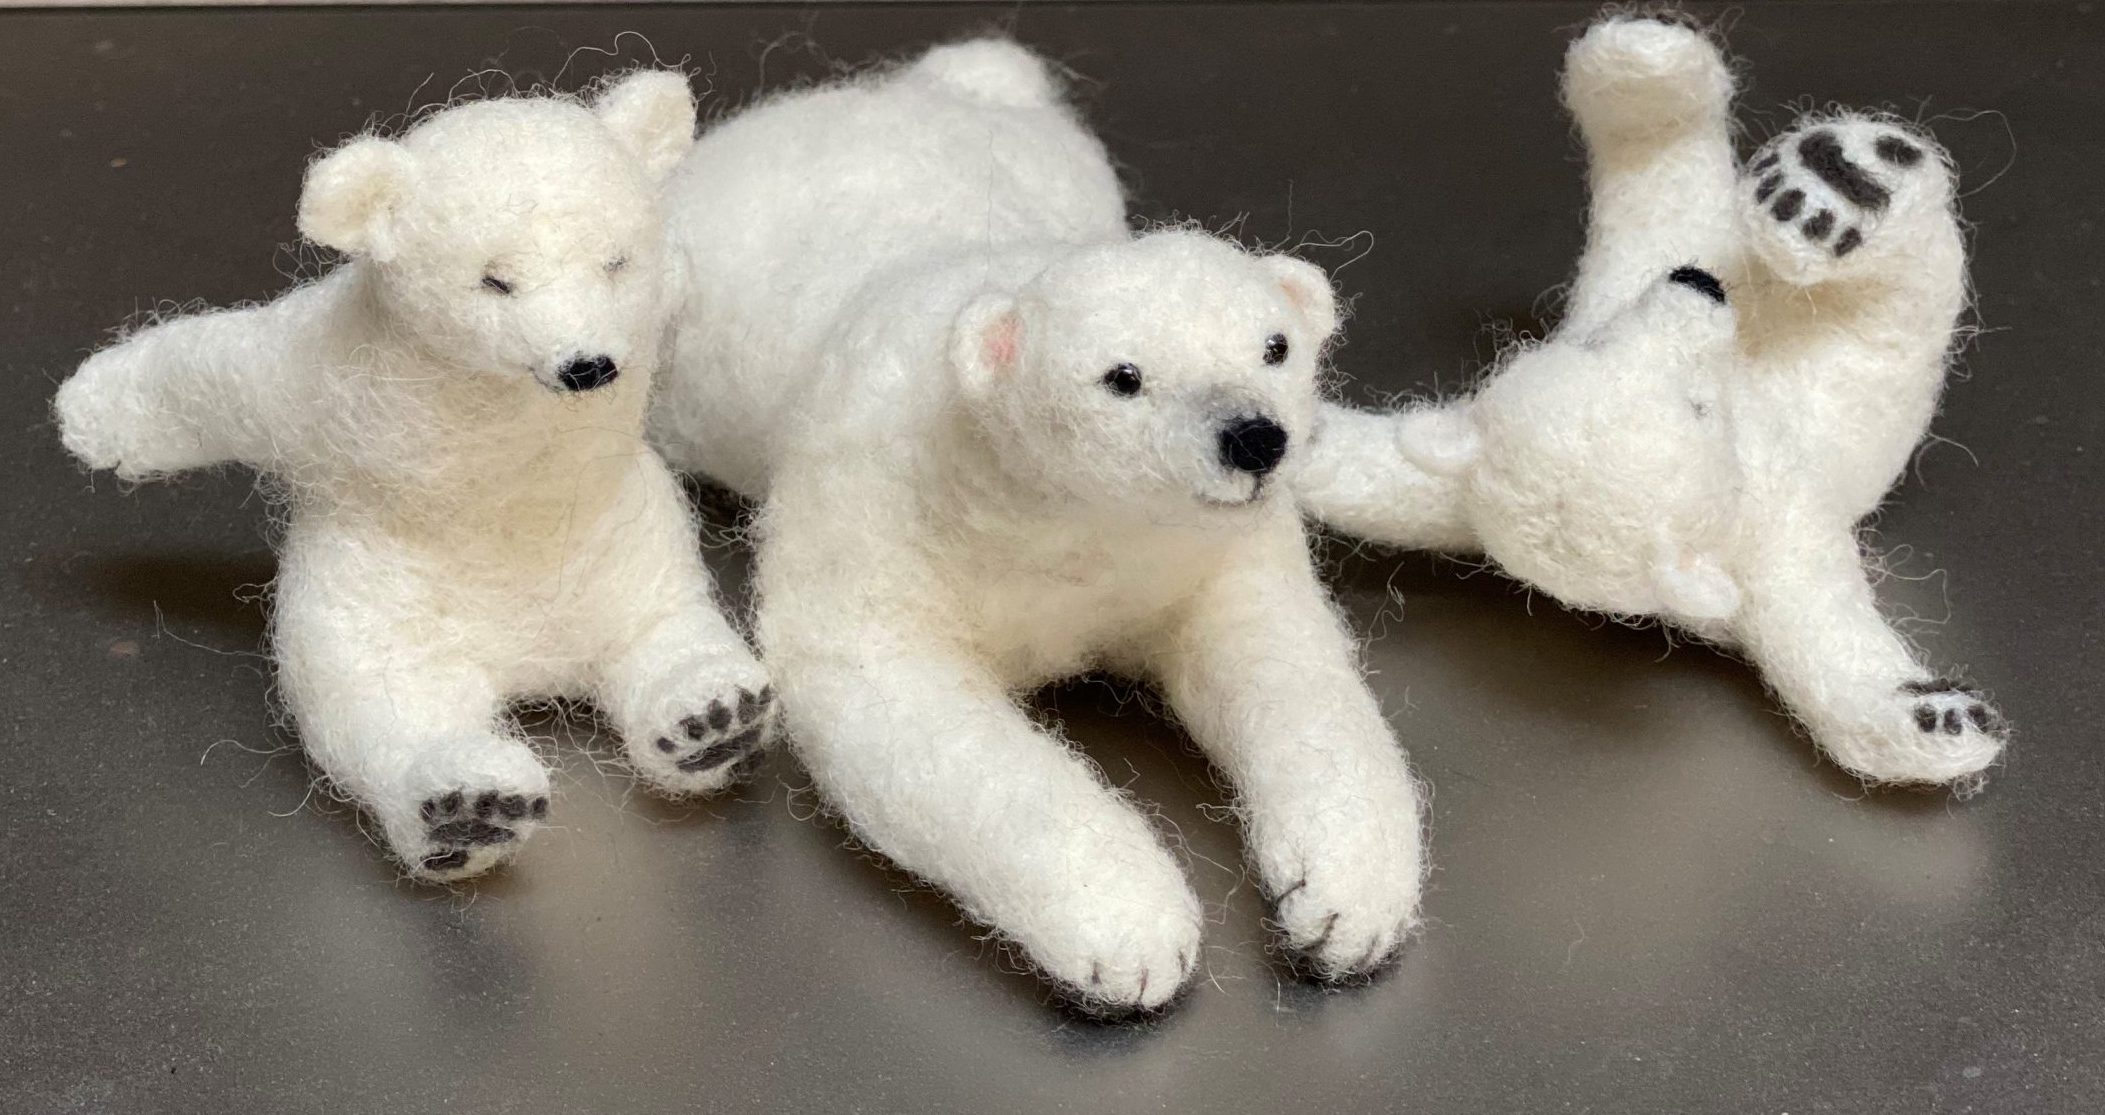 3 miniture felted polar bears.